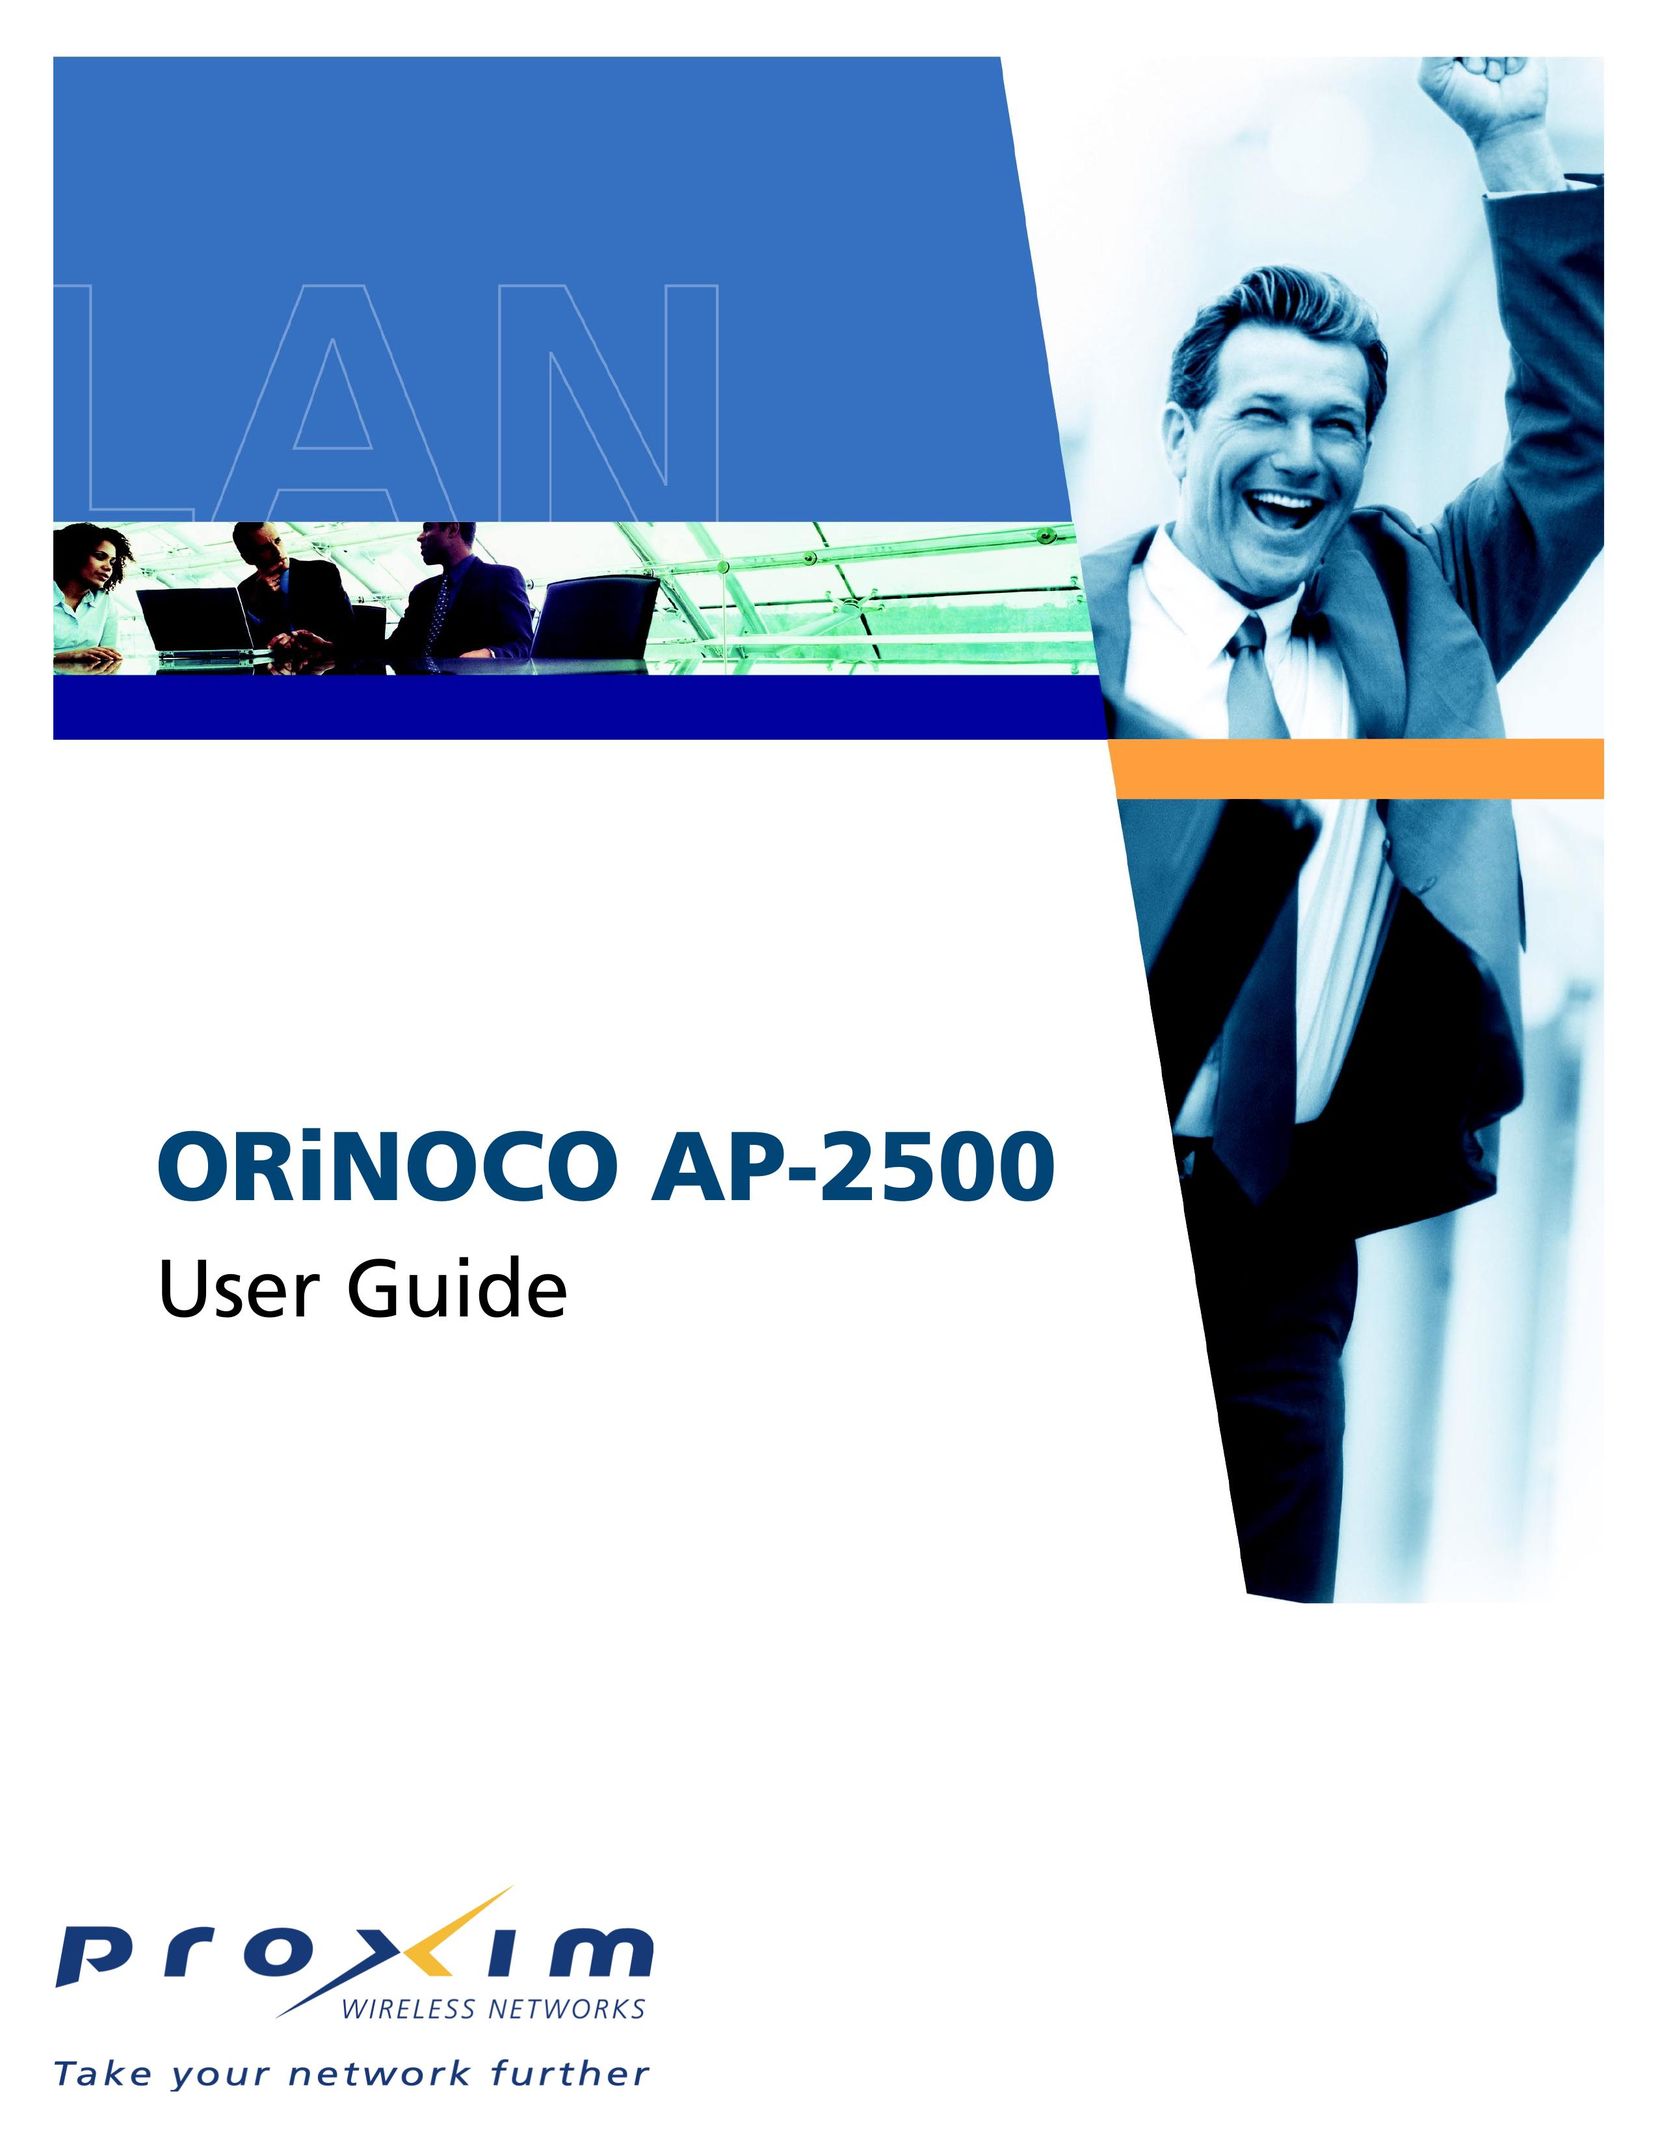 Proxim AP-2500 Network Router User Manual